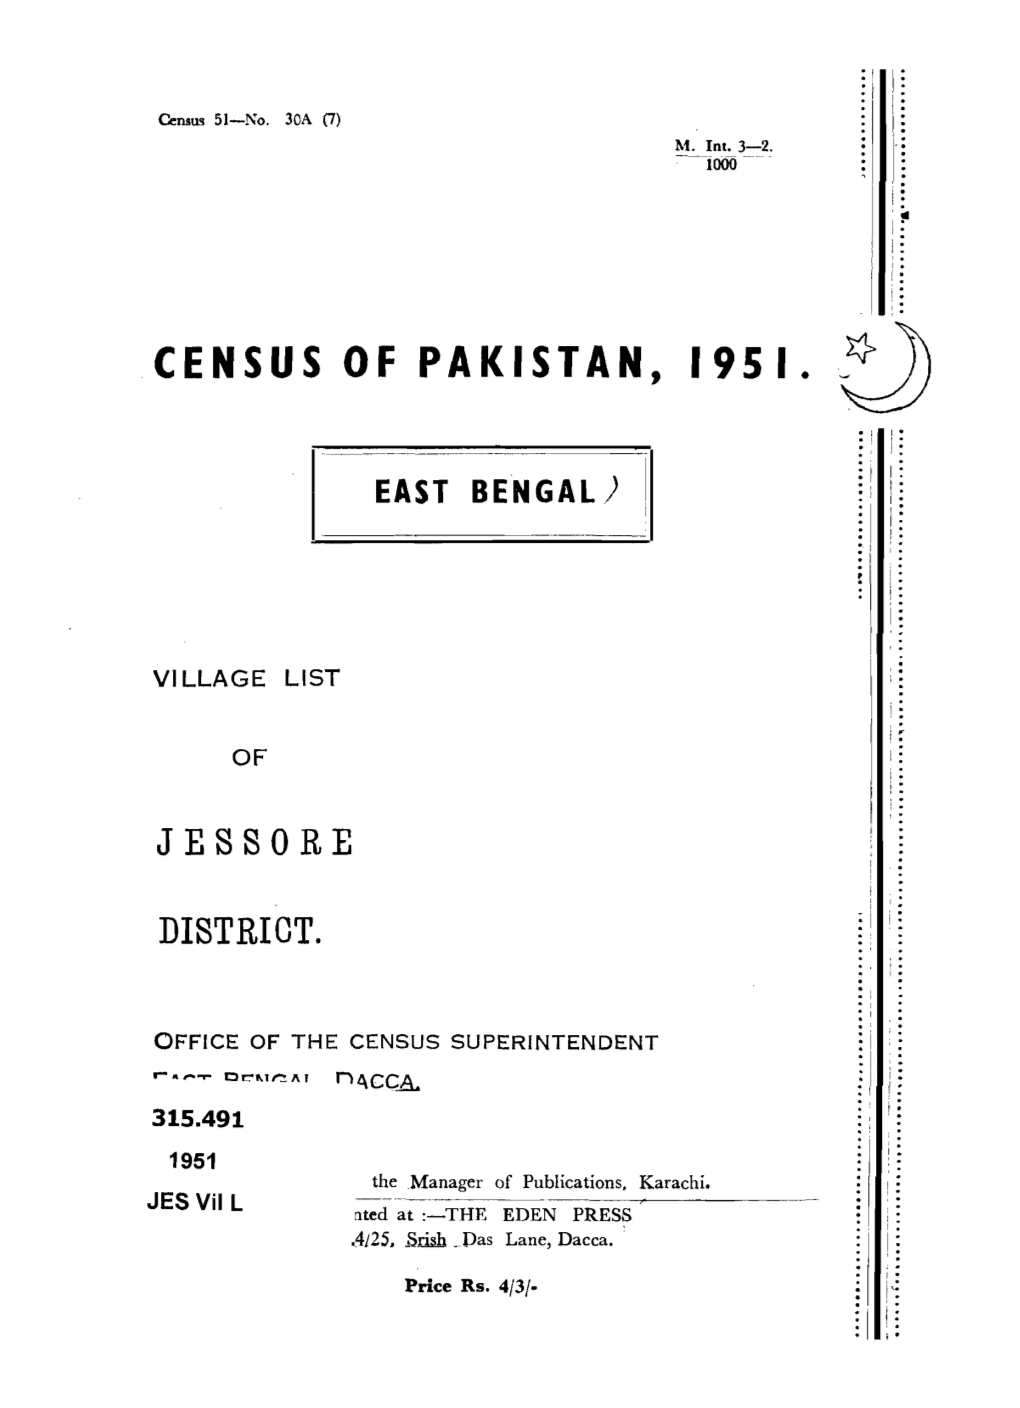 Village List of Jessore , Pakistan